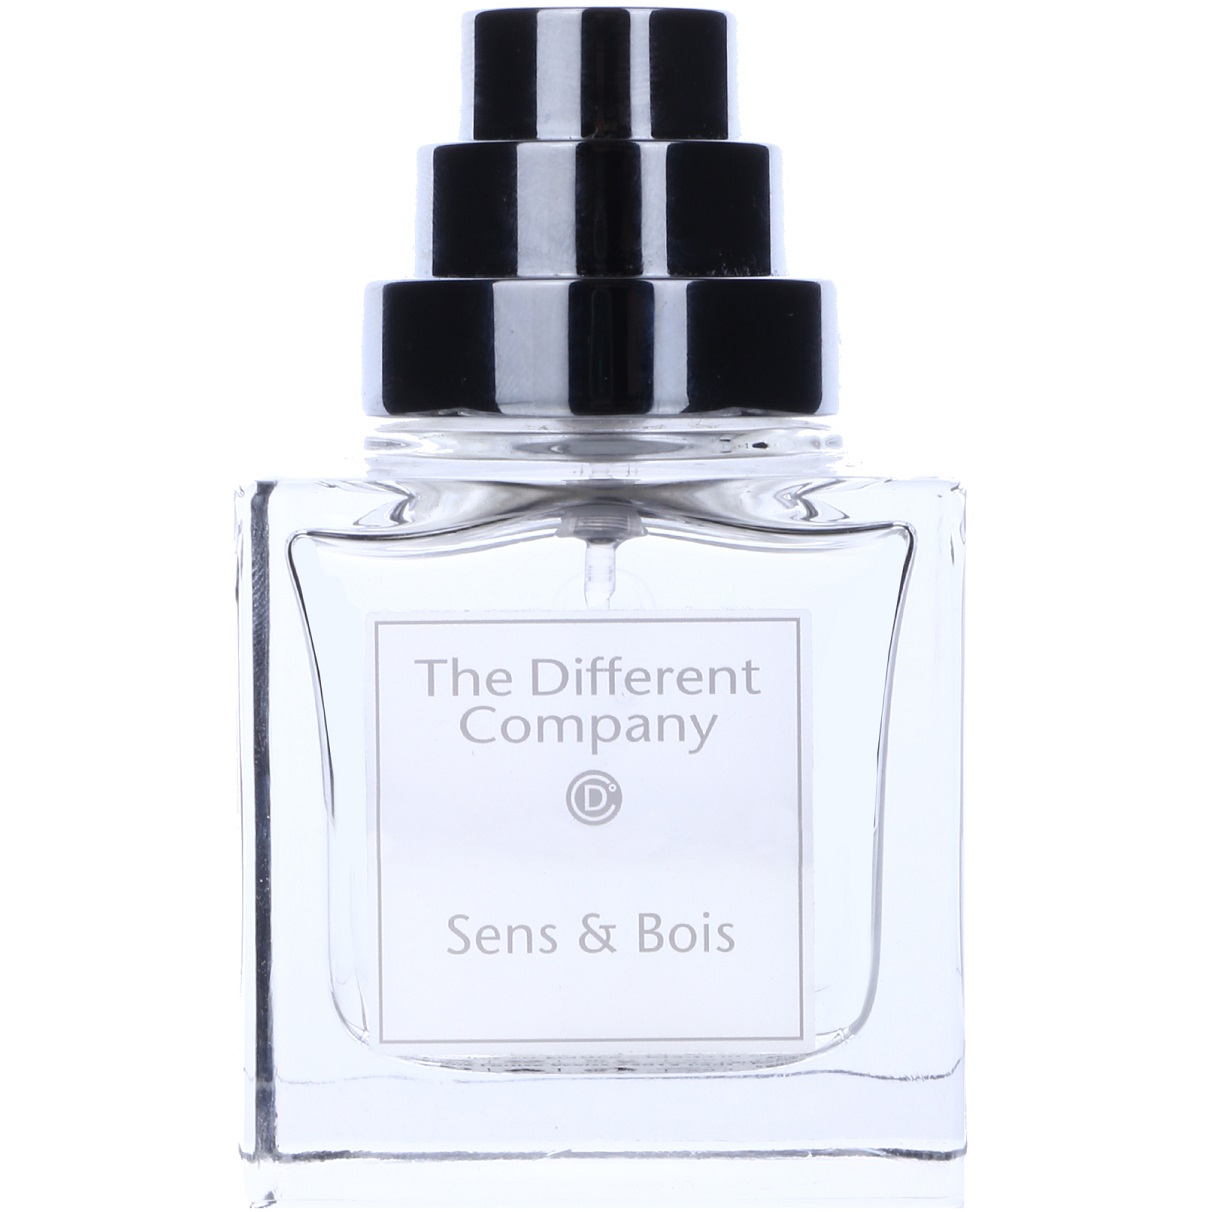 The Different Company - Sens & Bois (2мл)